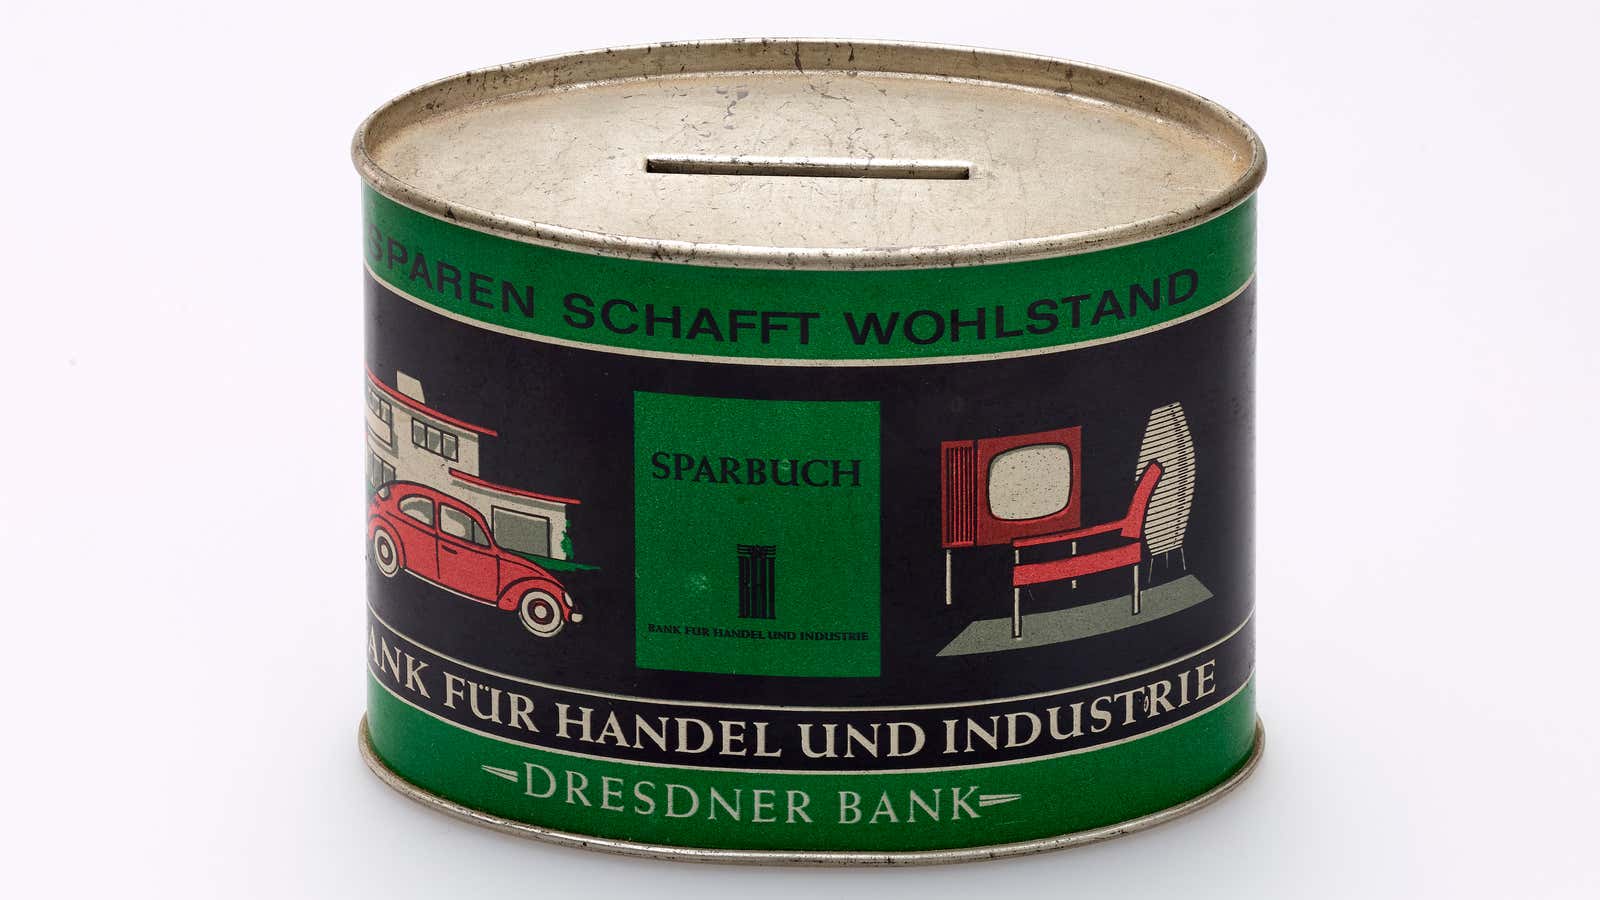 “Savings creates prosperity”: Tin money box from Dresdner Bank after 1945